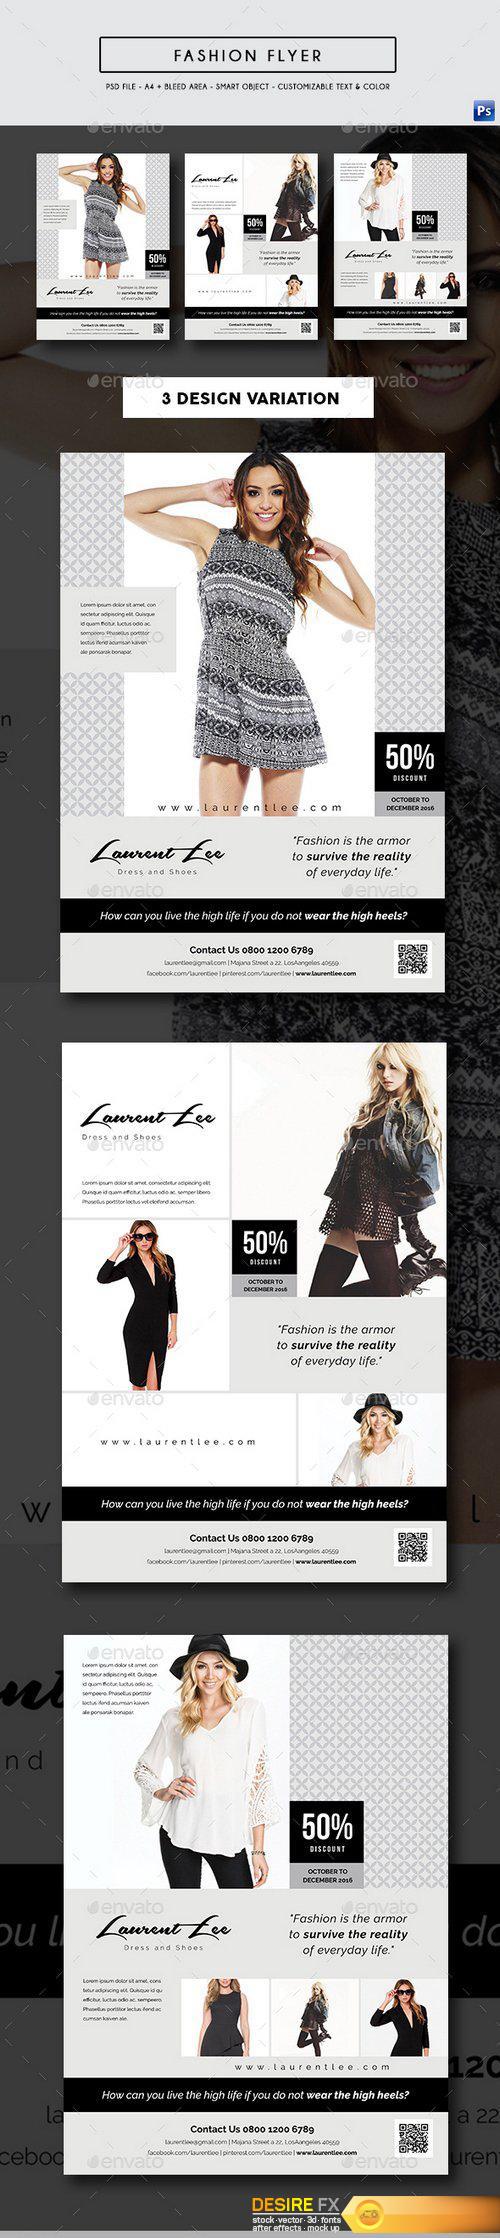 Graphicriver - Simple Fashion Flyer 17755017